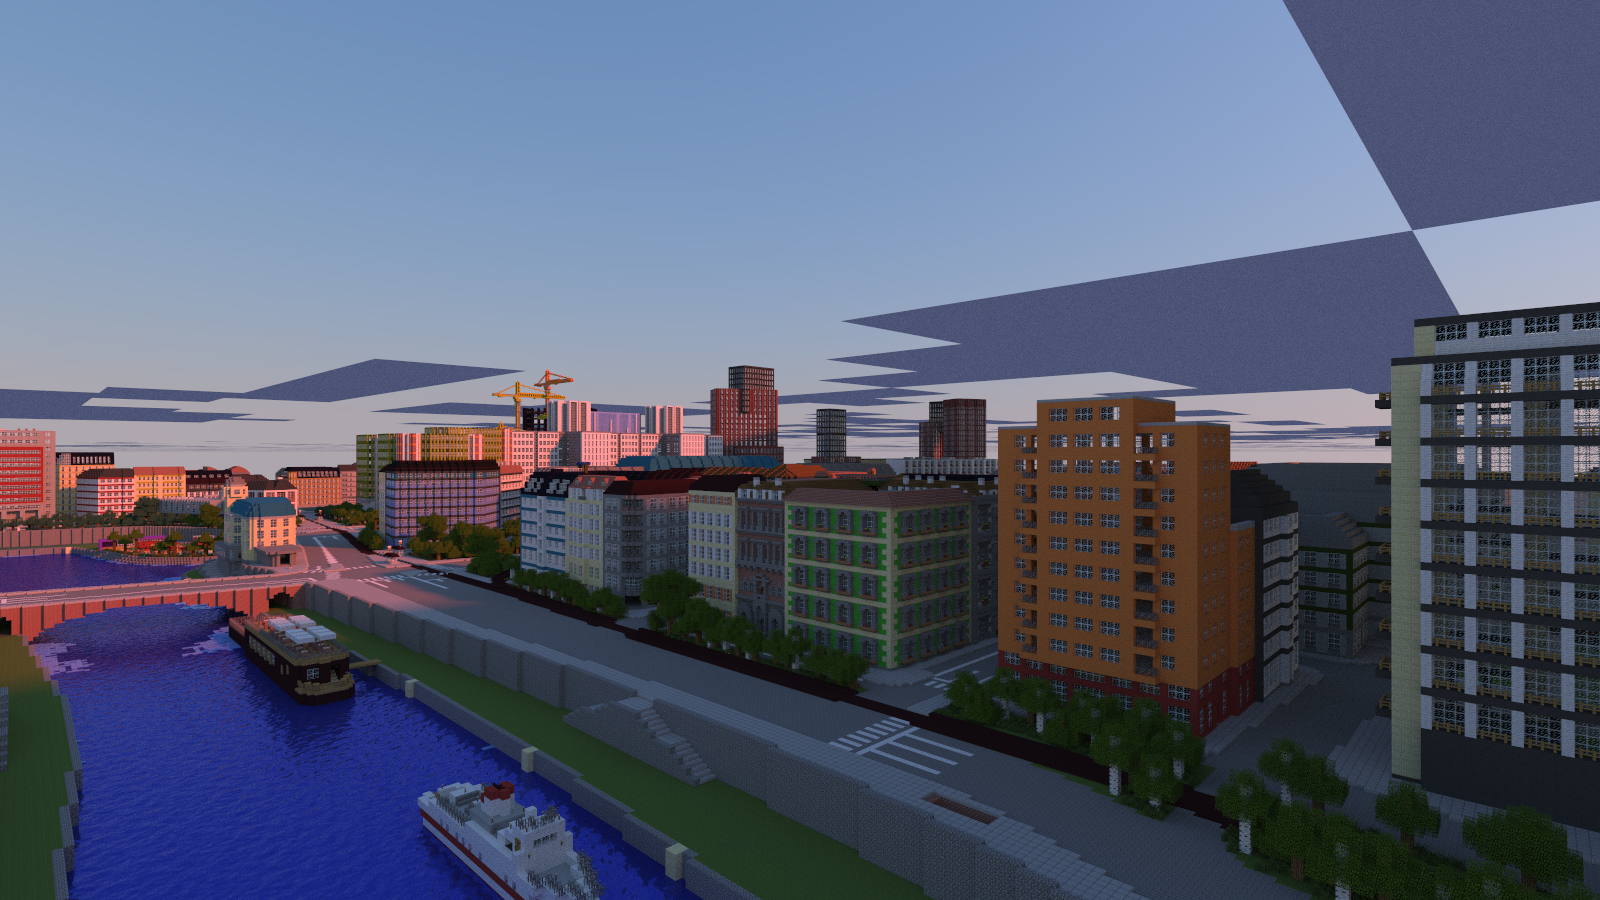 A rendered image of Vienna's Donaukanal built in Minecraft at McVienna